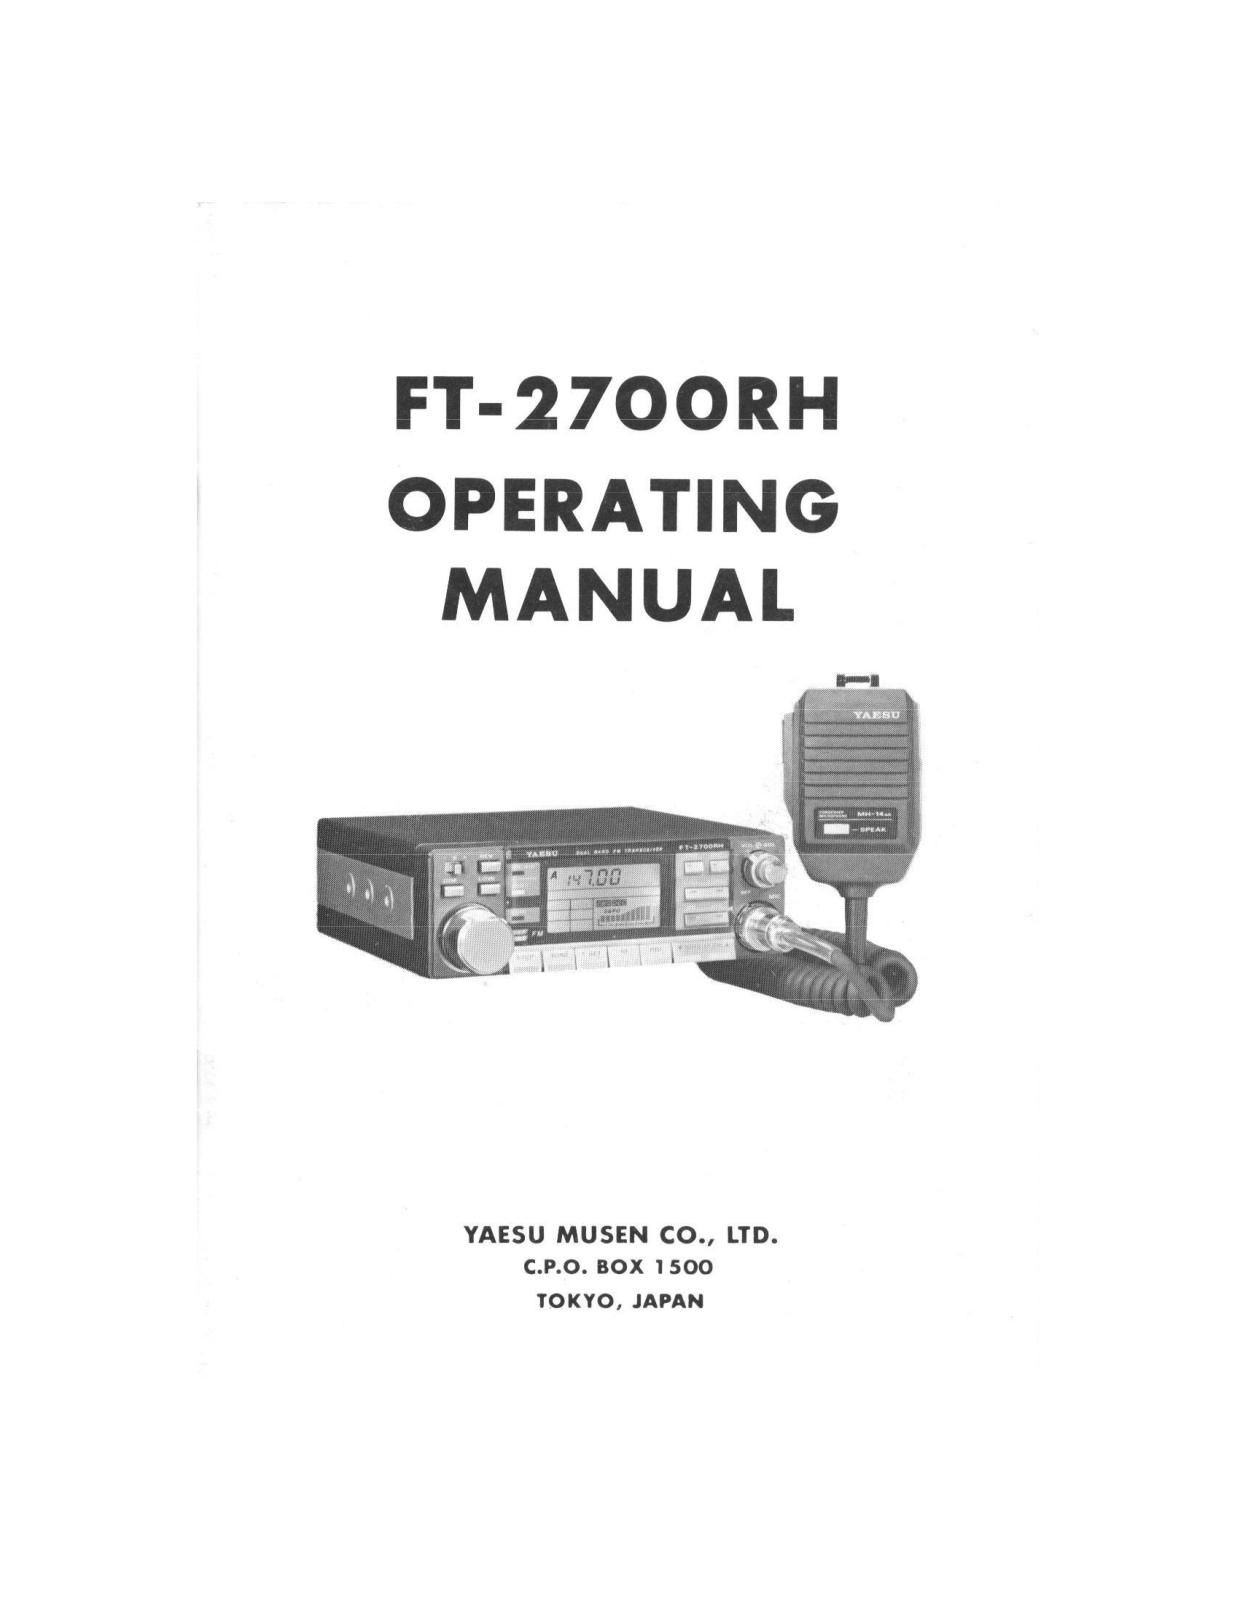 Yaesu FT-2700RH User Manual